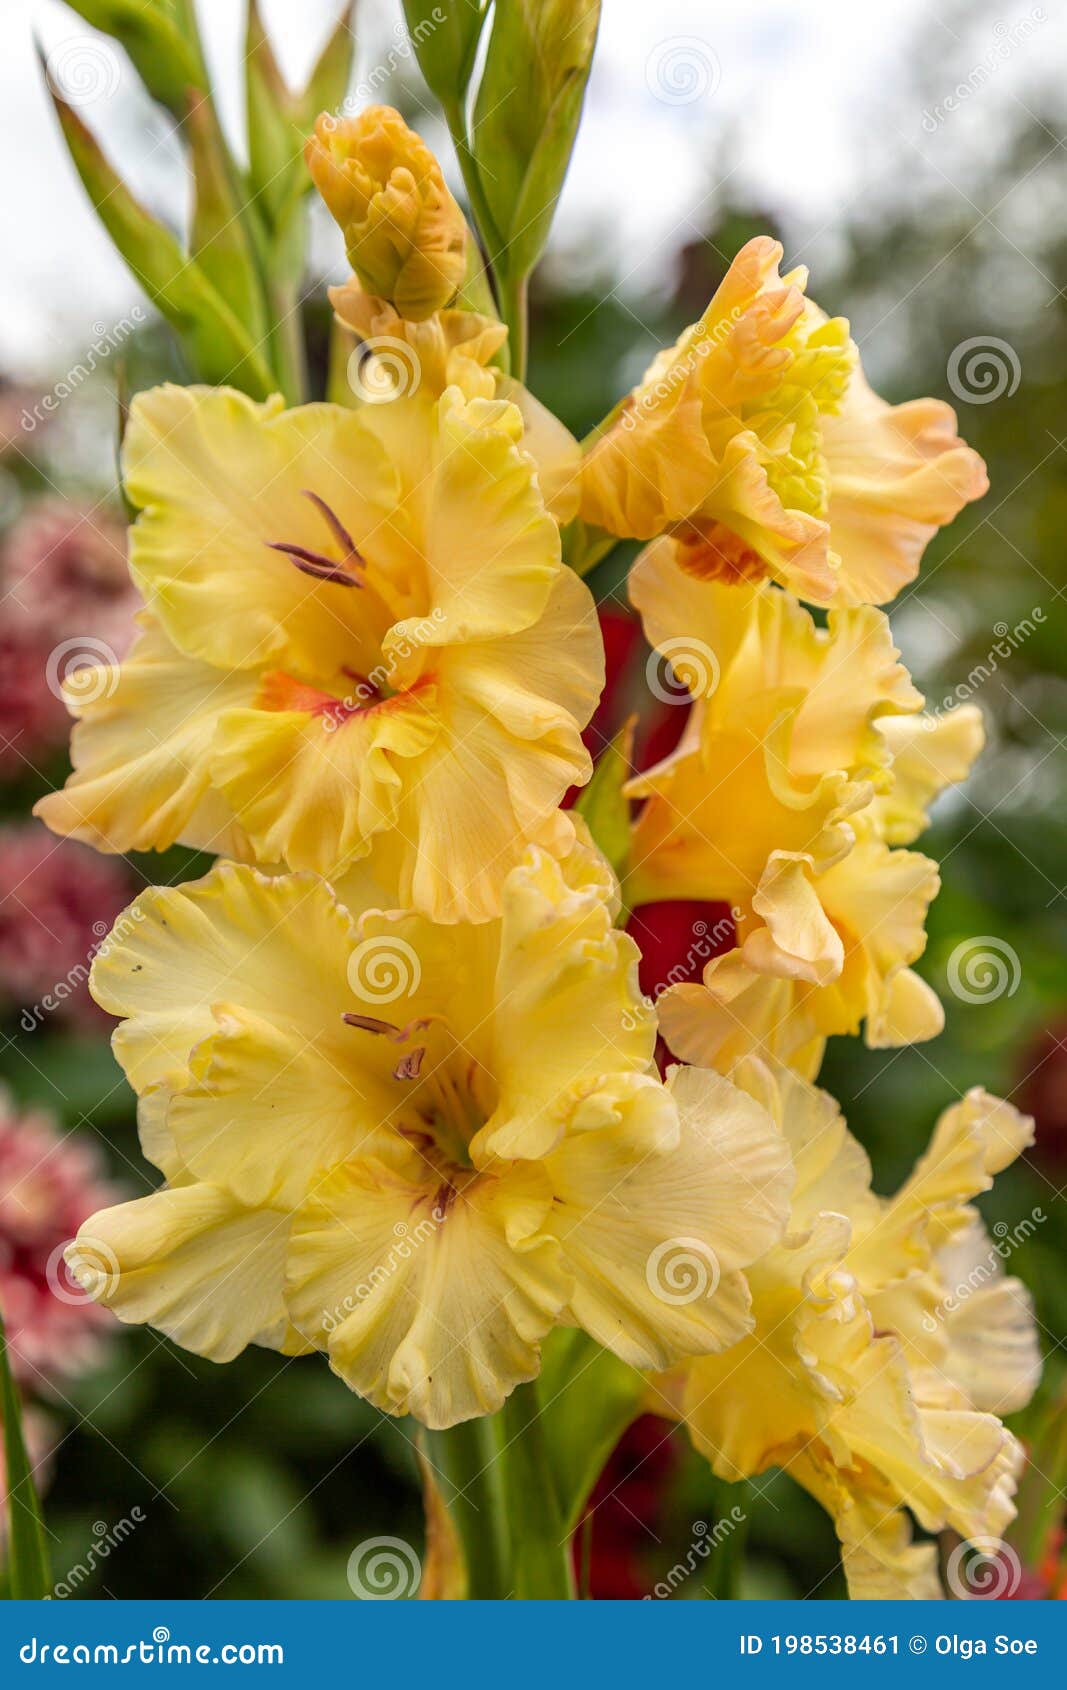 yellow flower gladiolos closeup in garden